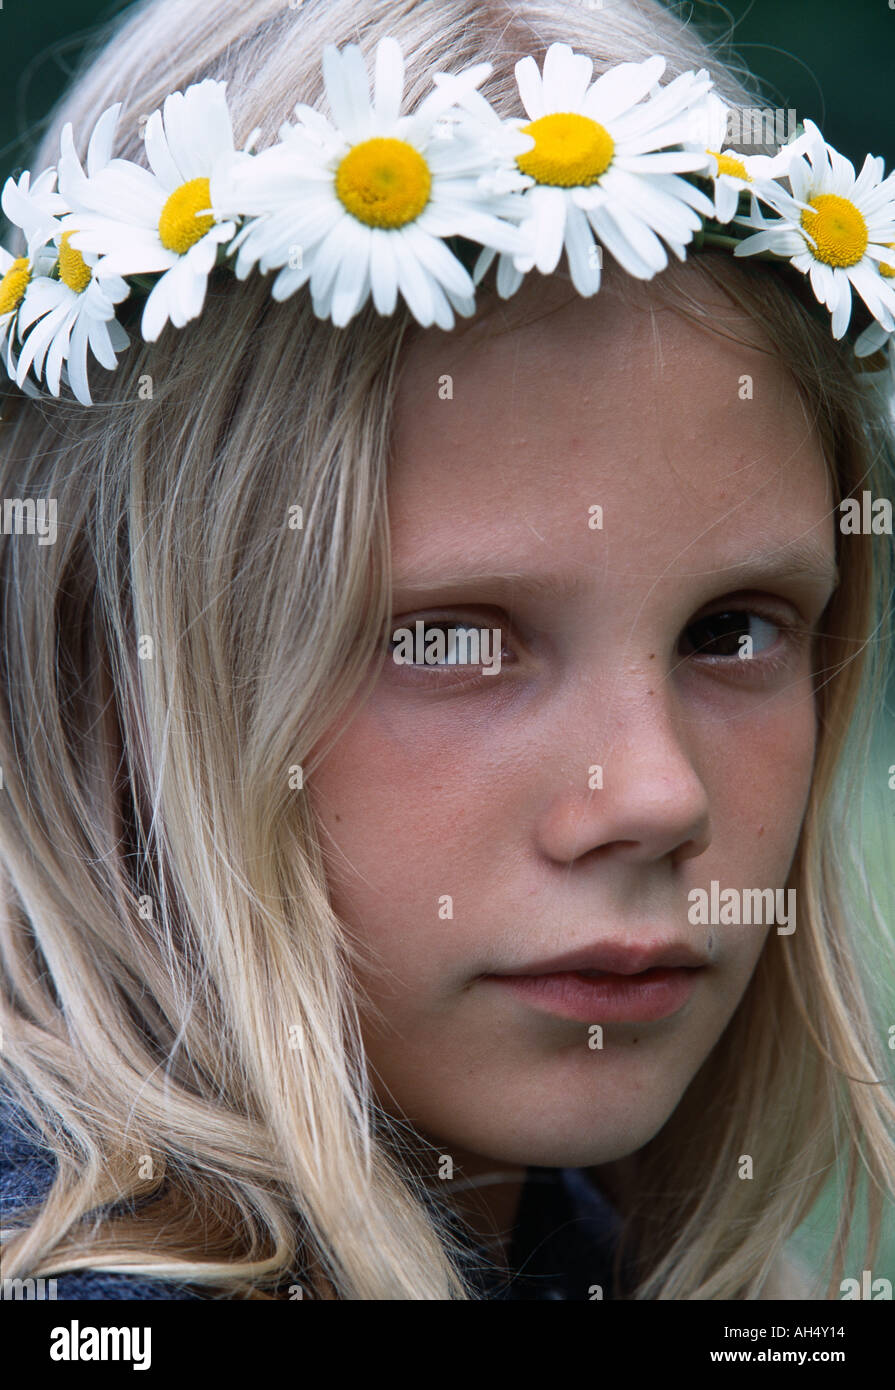 YOUNG ESTONIAN GIRL WEARING FLOWER CROWN Stock Photo